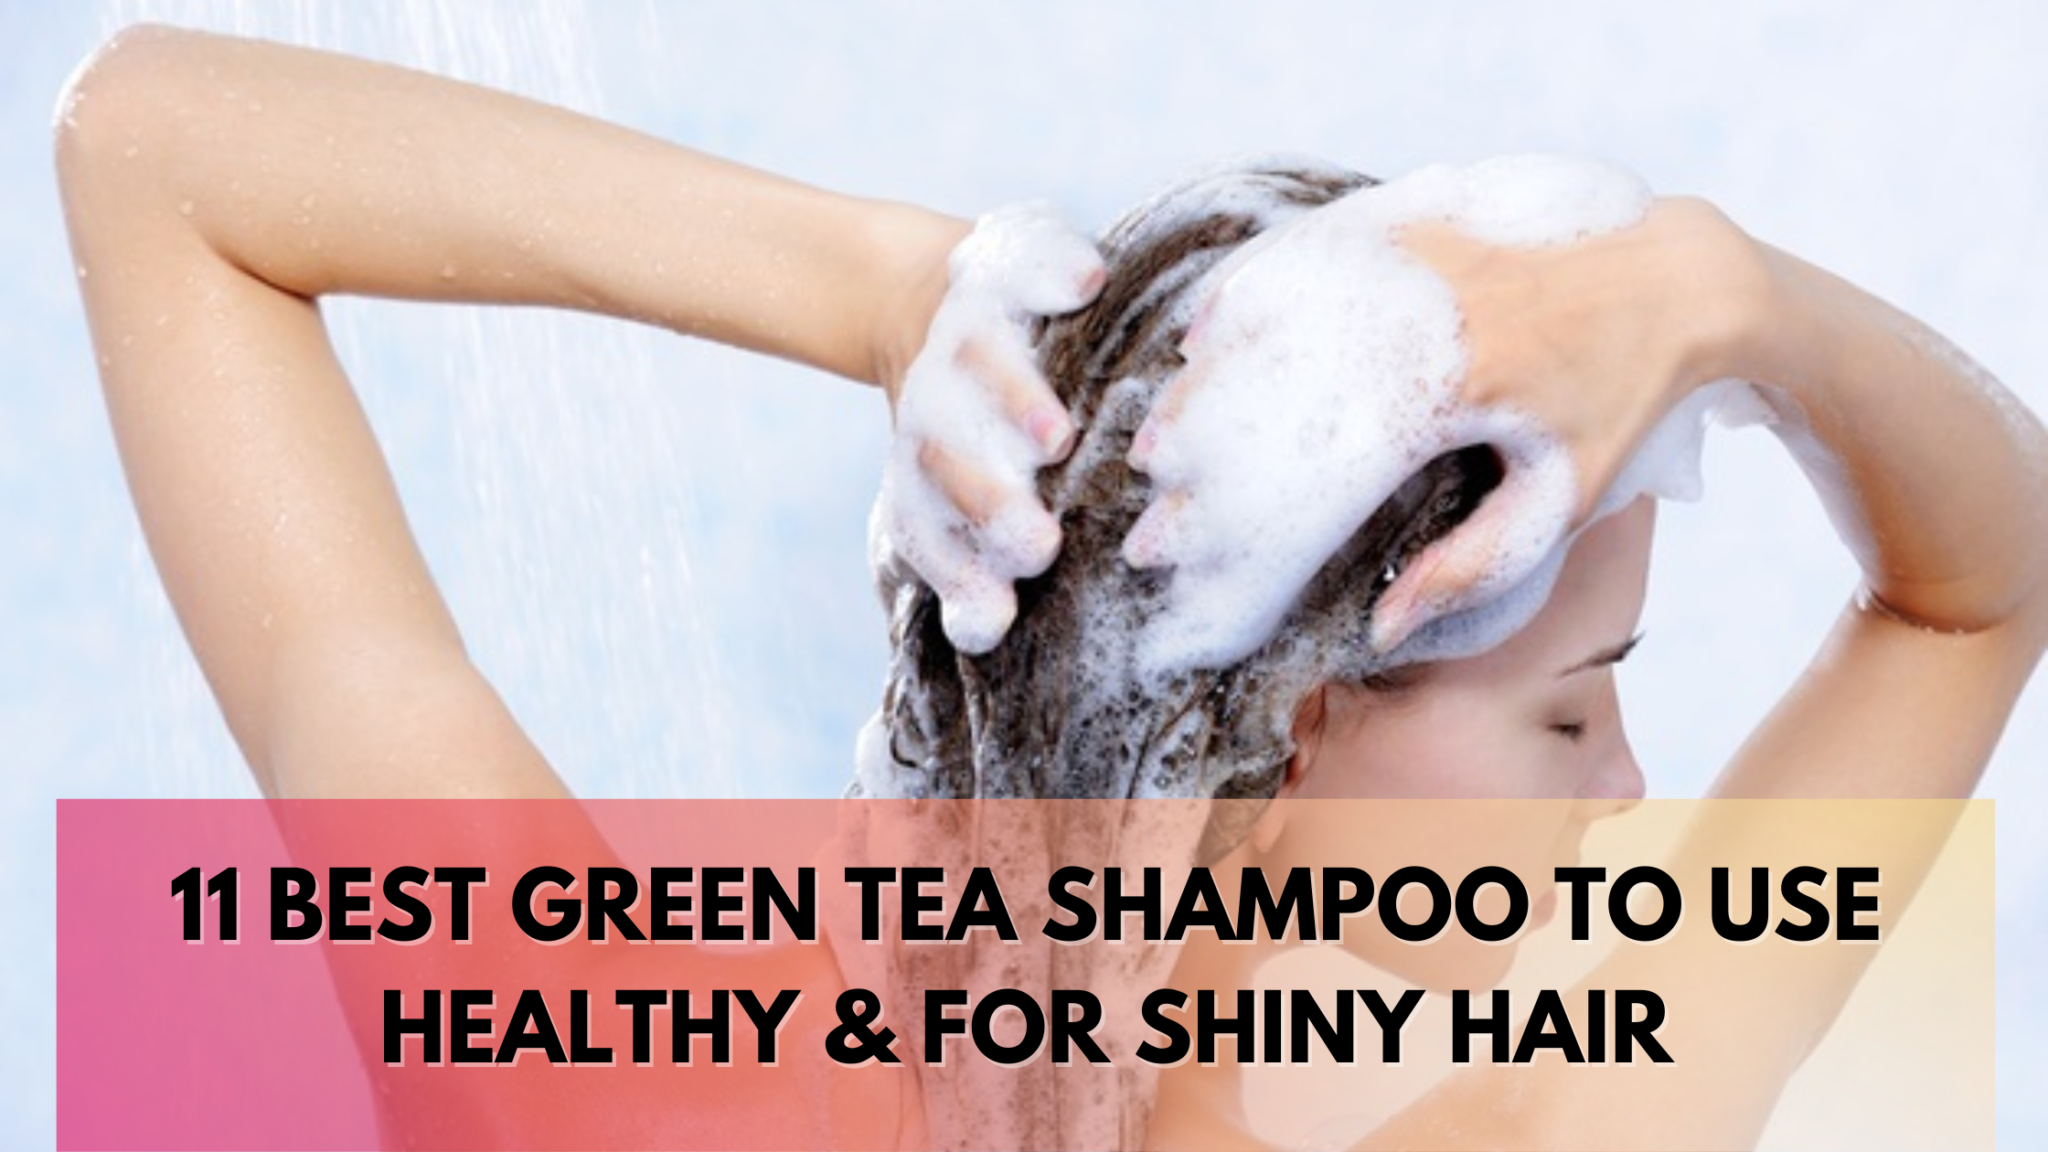 11 Best Green Tea Shampoo To Use Healthy & For Shiny Hair